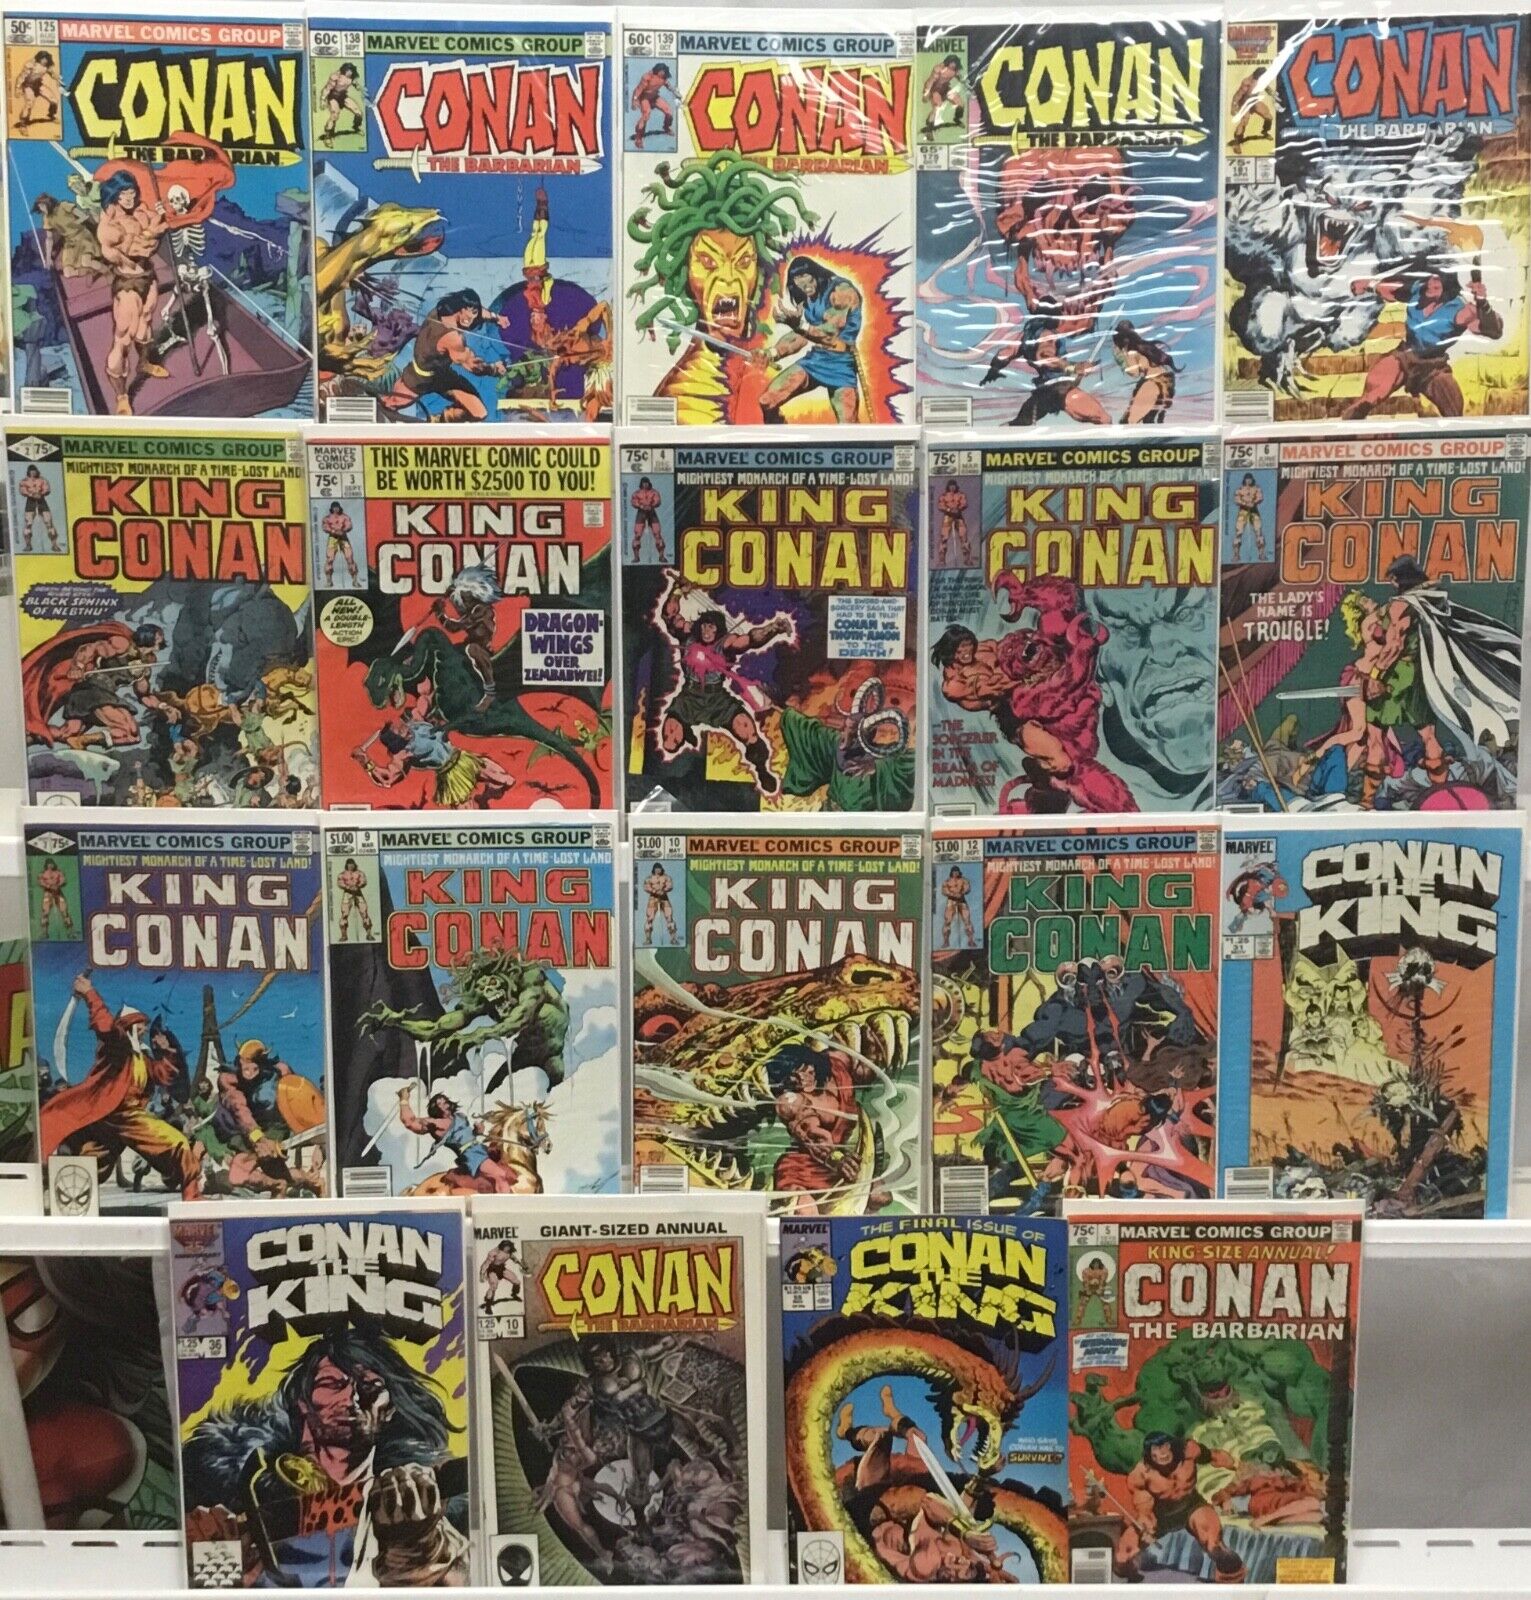 Marvel Comics - Conan the Barbarian / King Conan - Comic Book Lot of 19 Issues